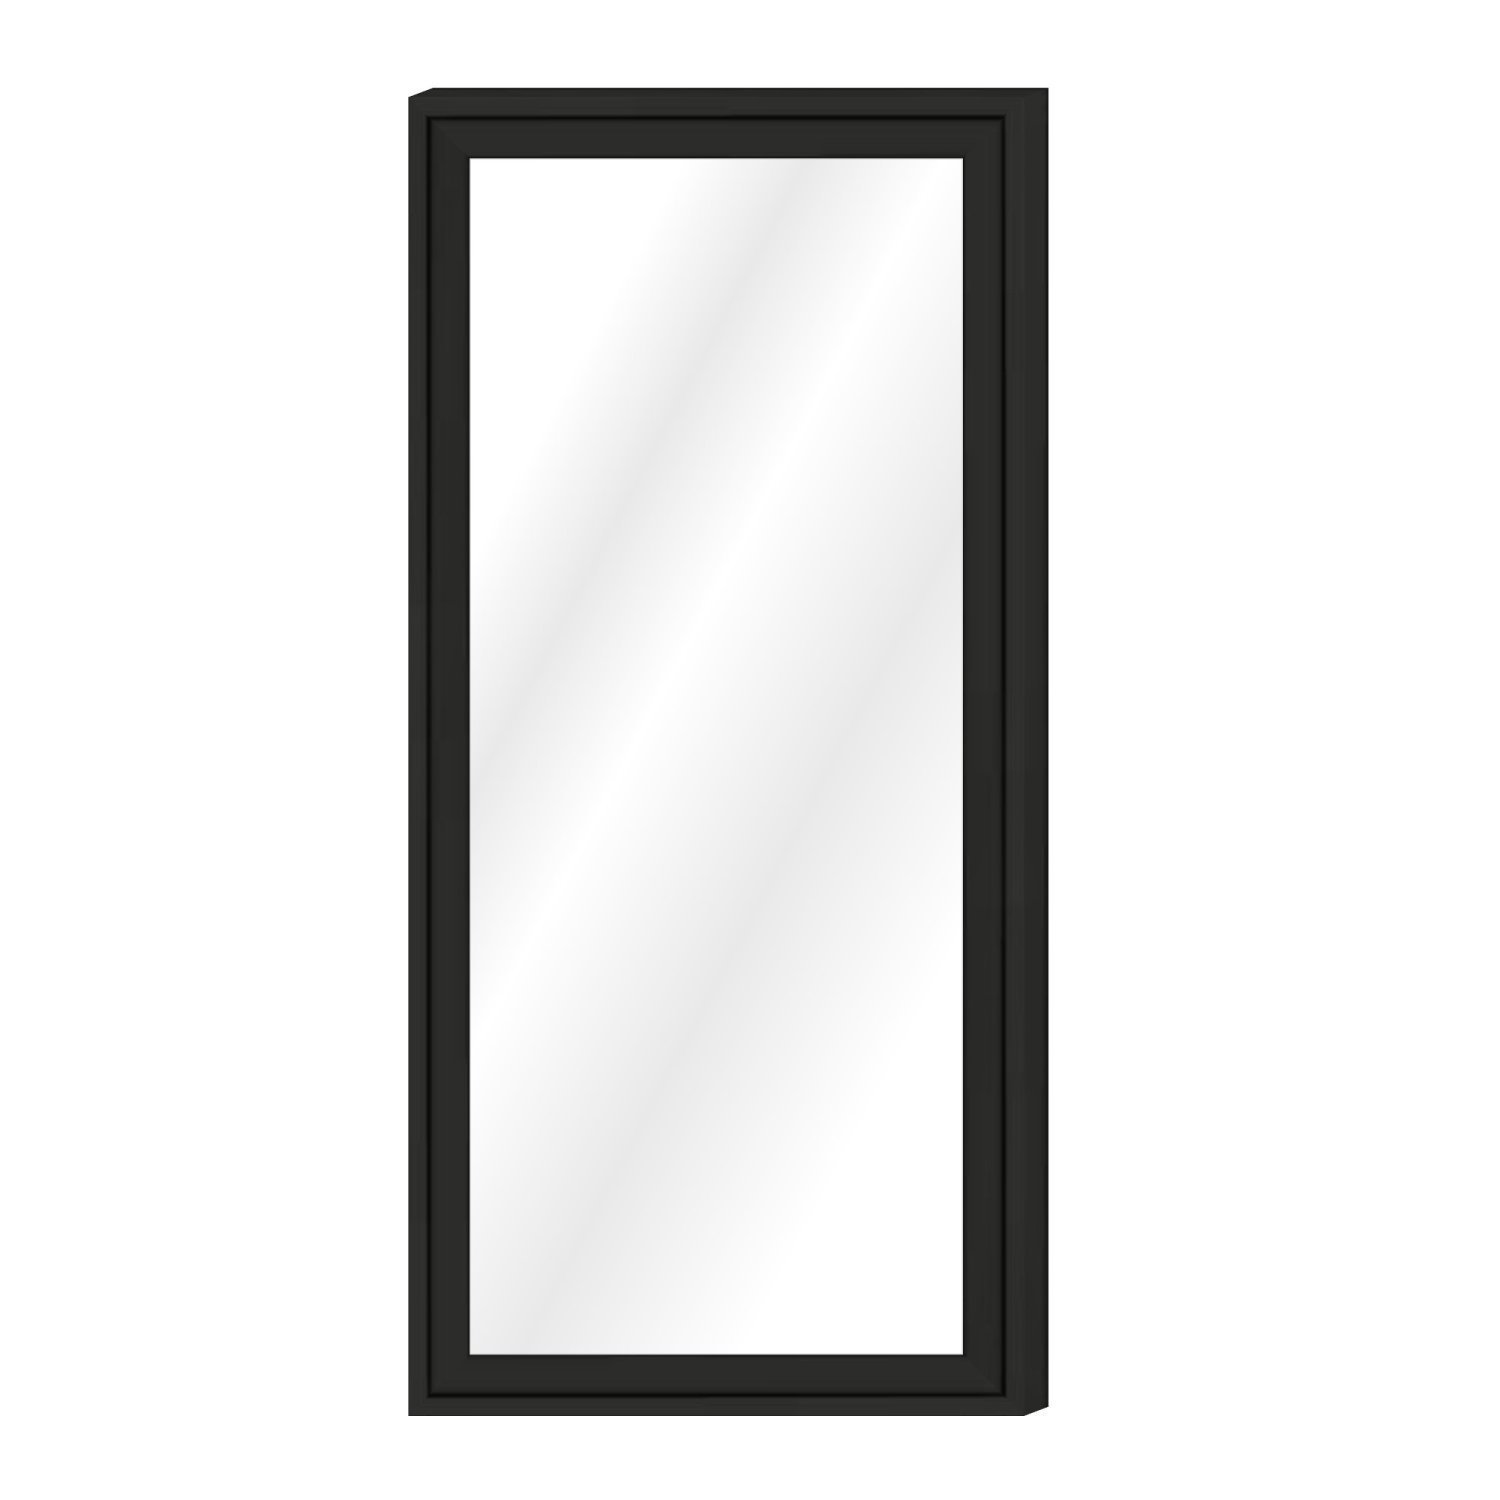 Espelho Elegant 150pt 70cm X 150cm - 5